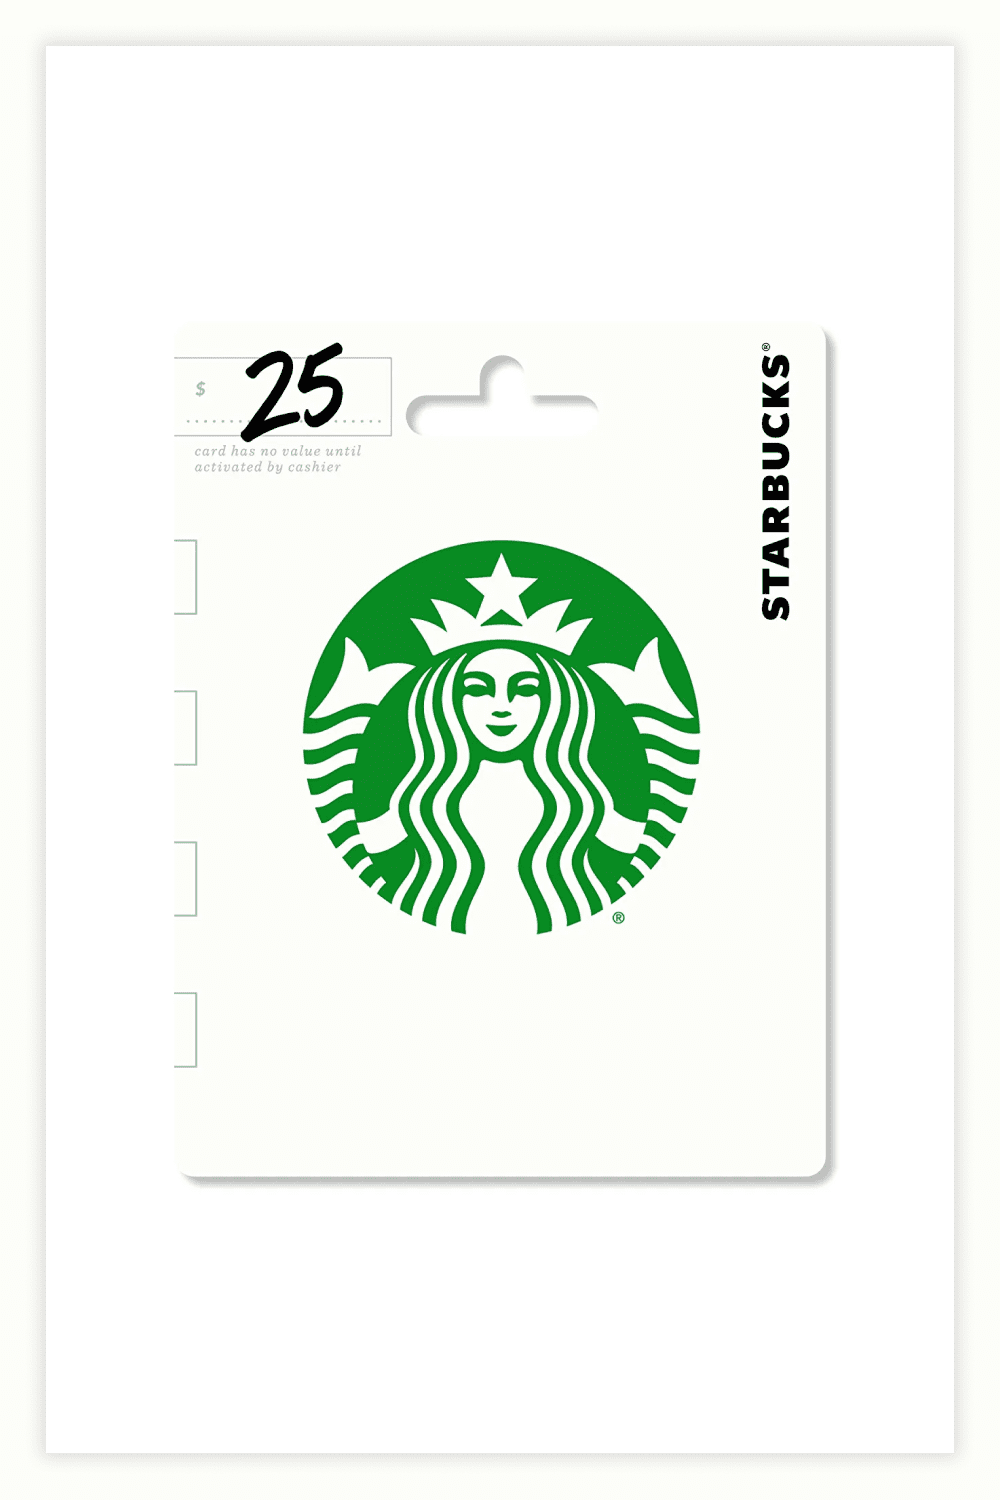 White Starbucks Gift Card with green logo.